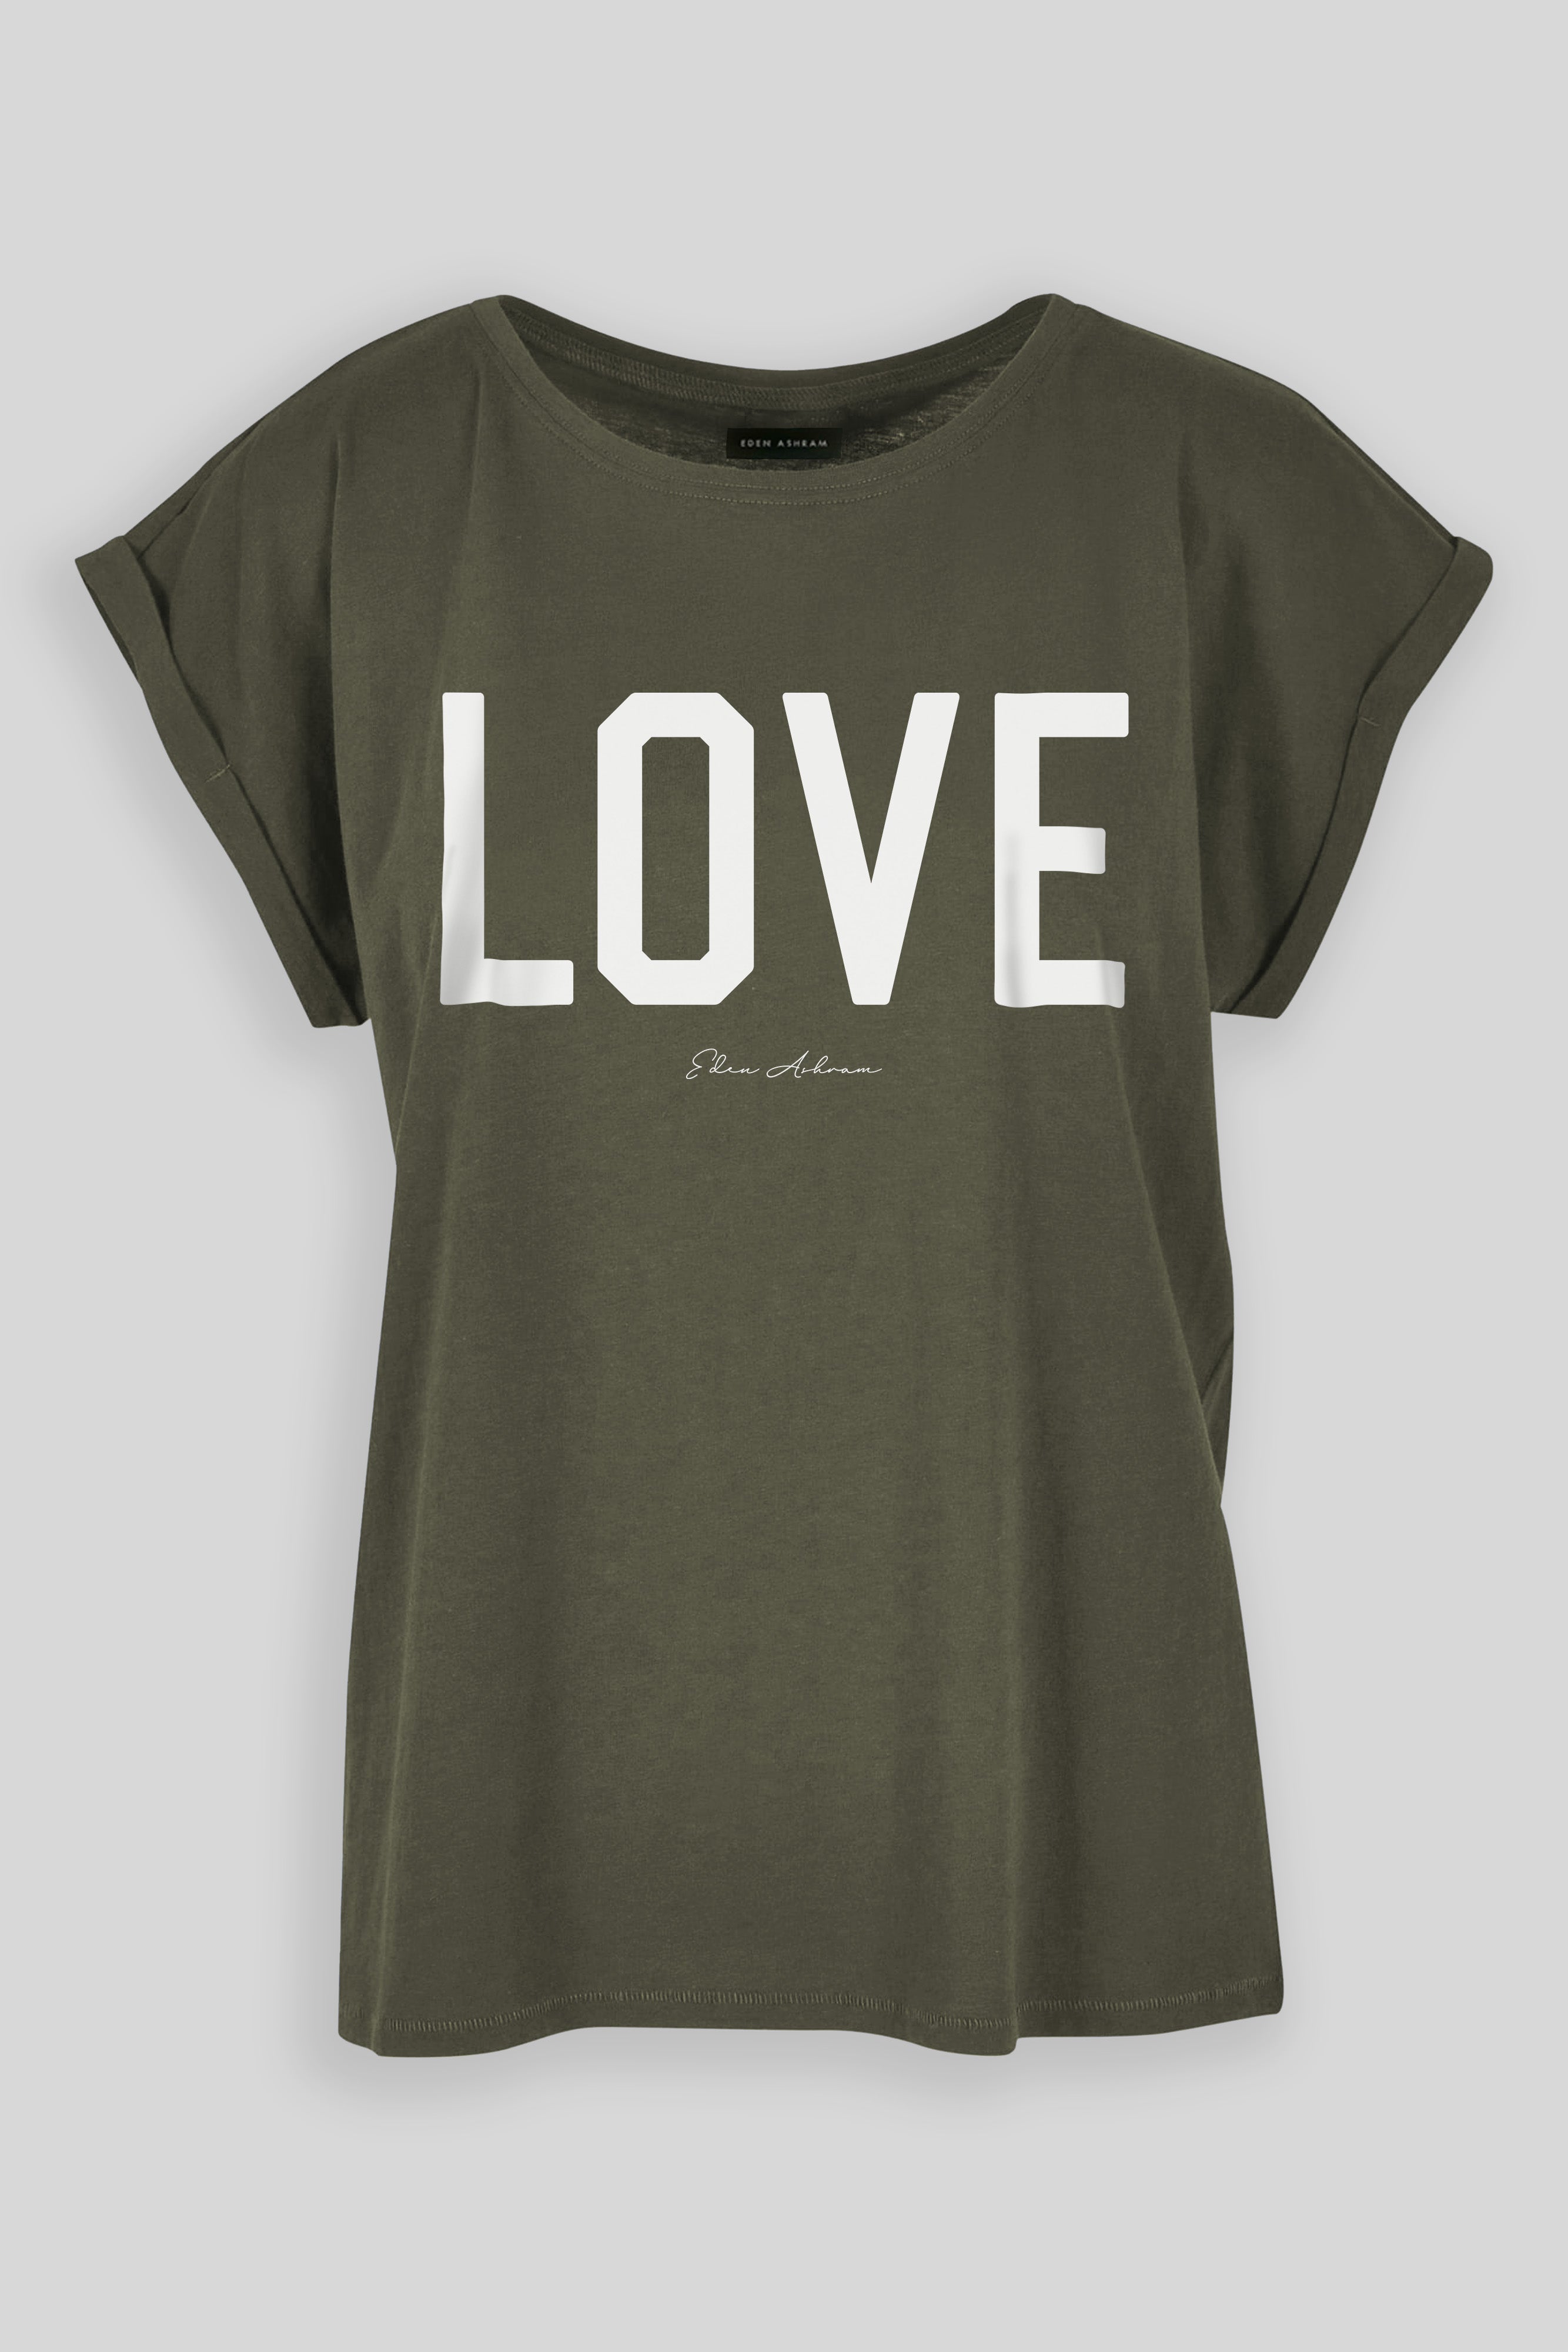 EDEN ASHRAM LOVE Cali T-Shirt Olive